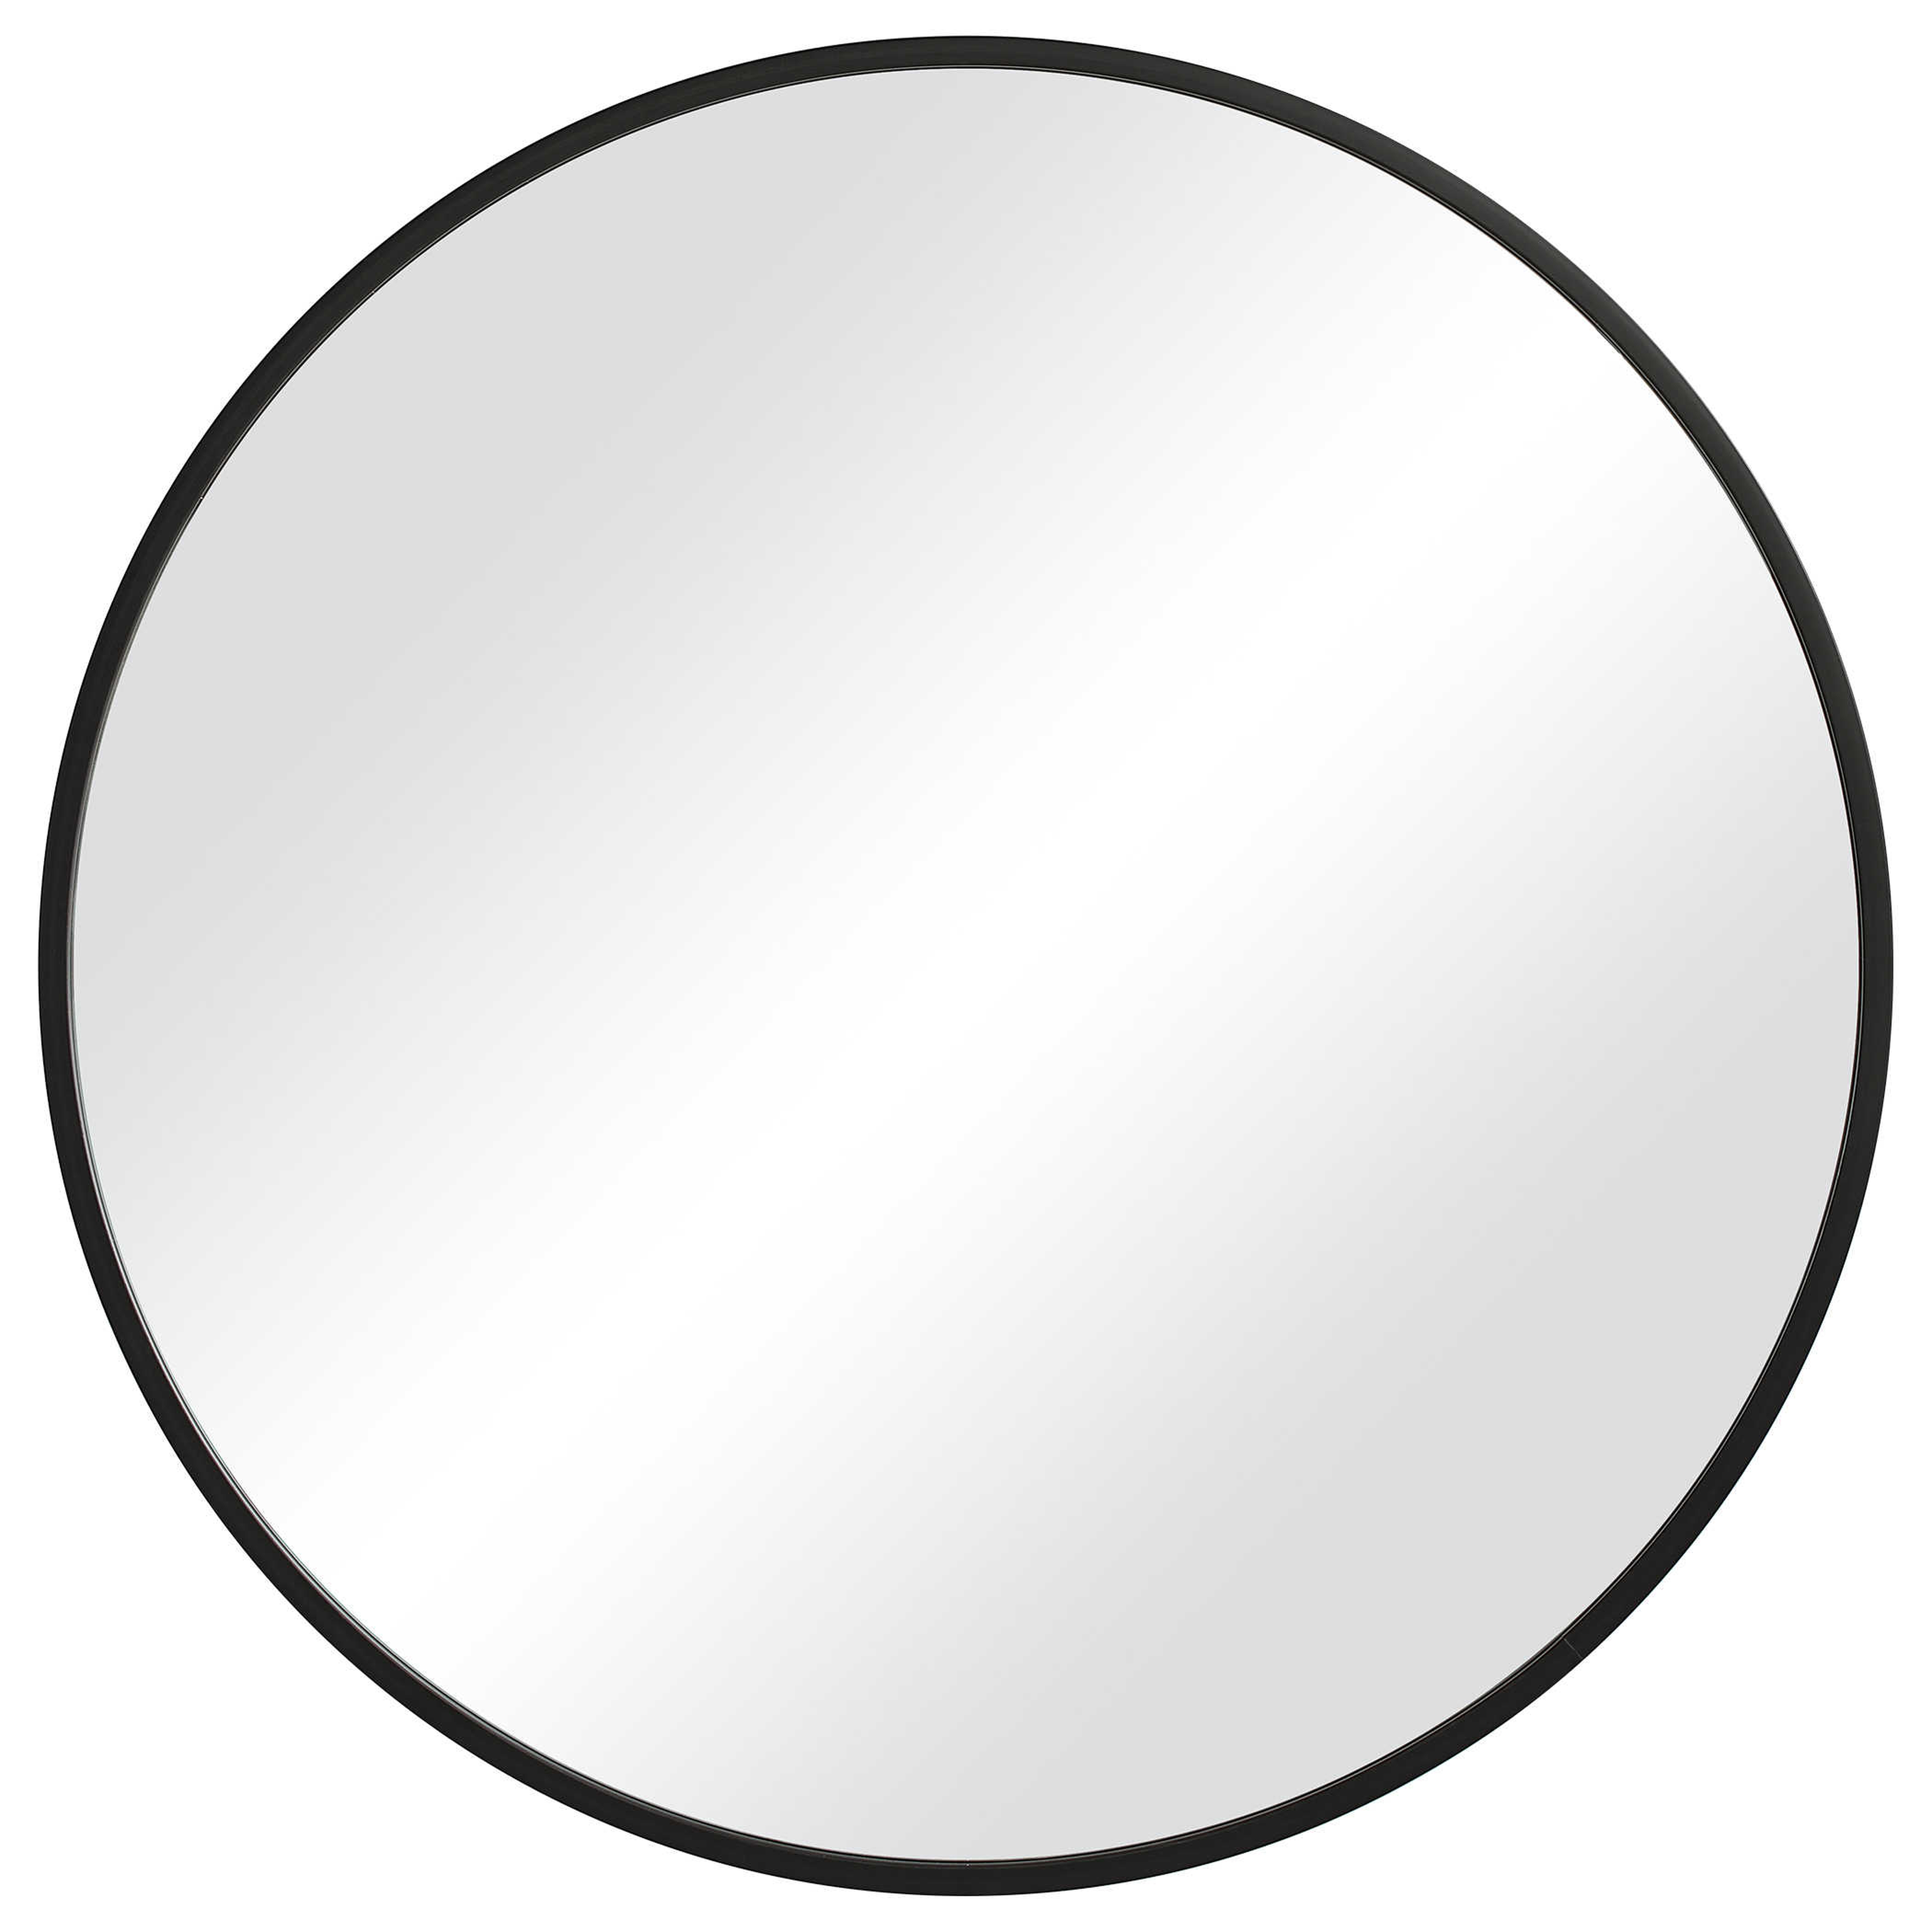 Simple 37" Round Mirror, Black Frame - Hudsonhill Foundry